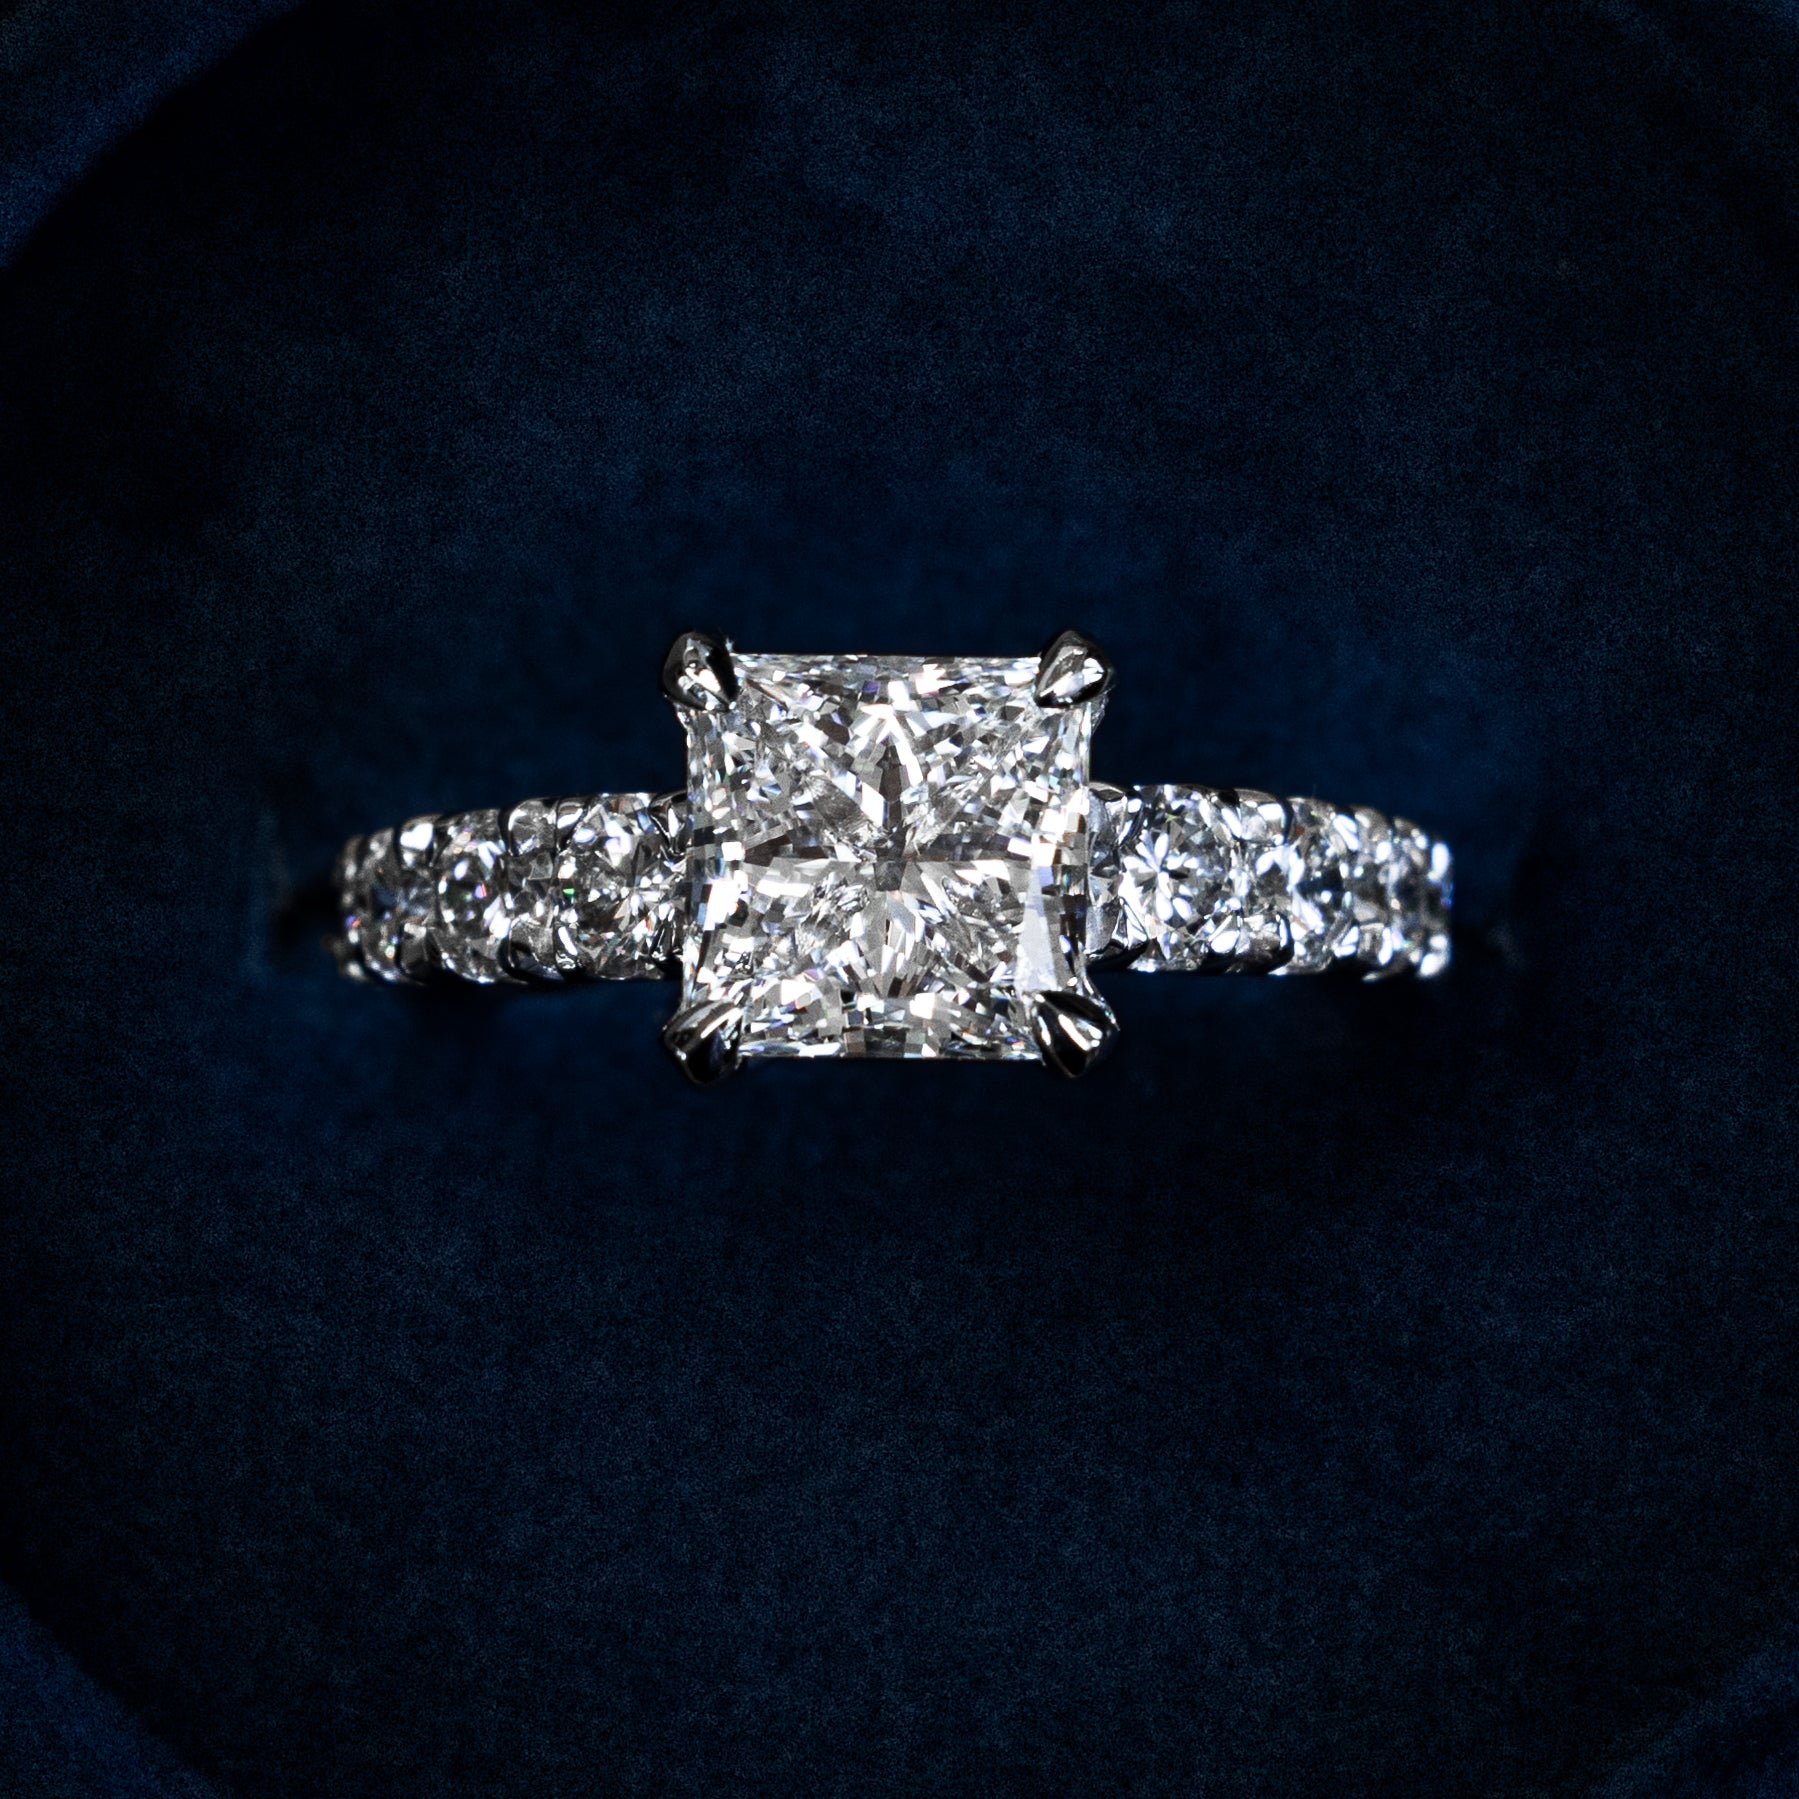 2 carat princess cut diamond with accent diamonds